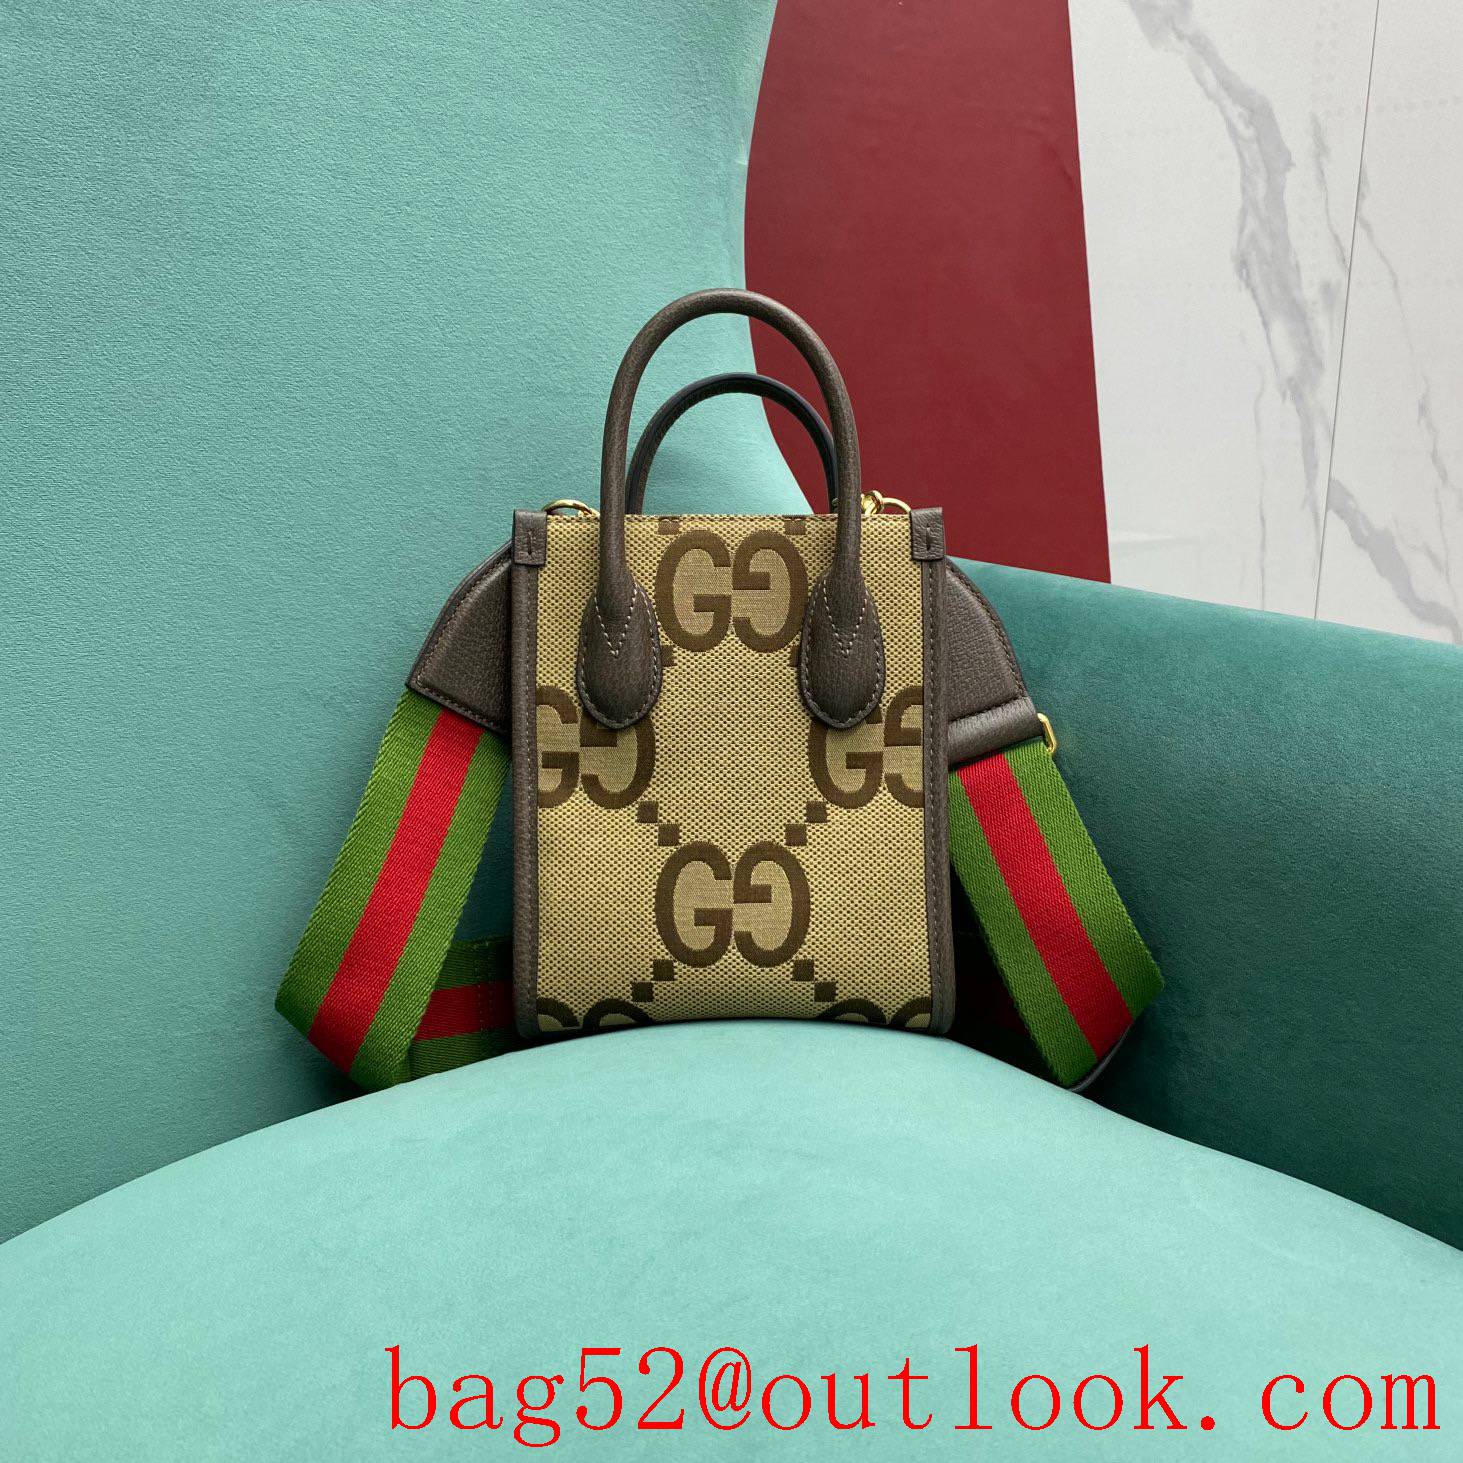 Gucci verticacl tote blue red width strap camel crossbody handbag